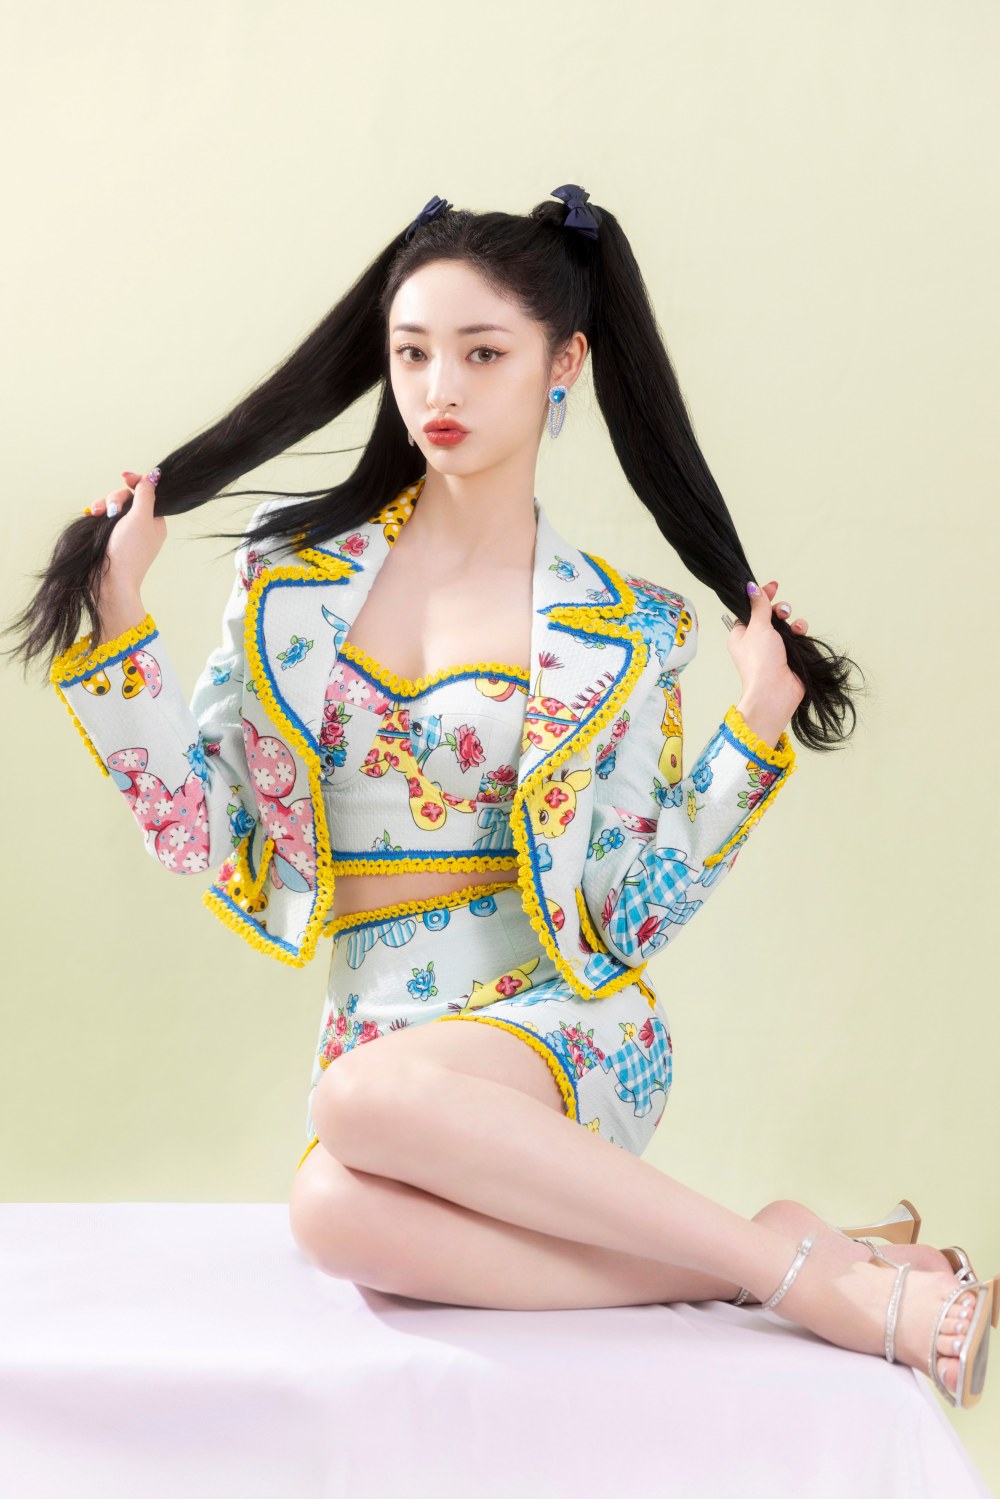 Jieqiong Zhou Sexy and Hottest Photos , Latest Pics